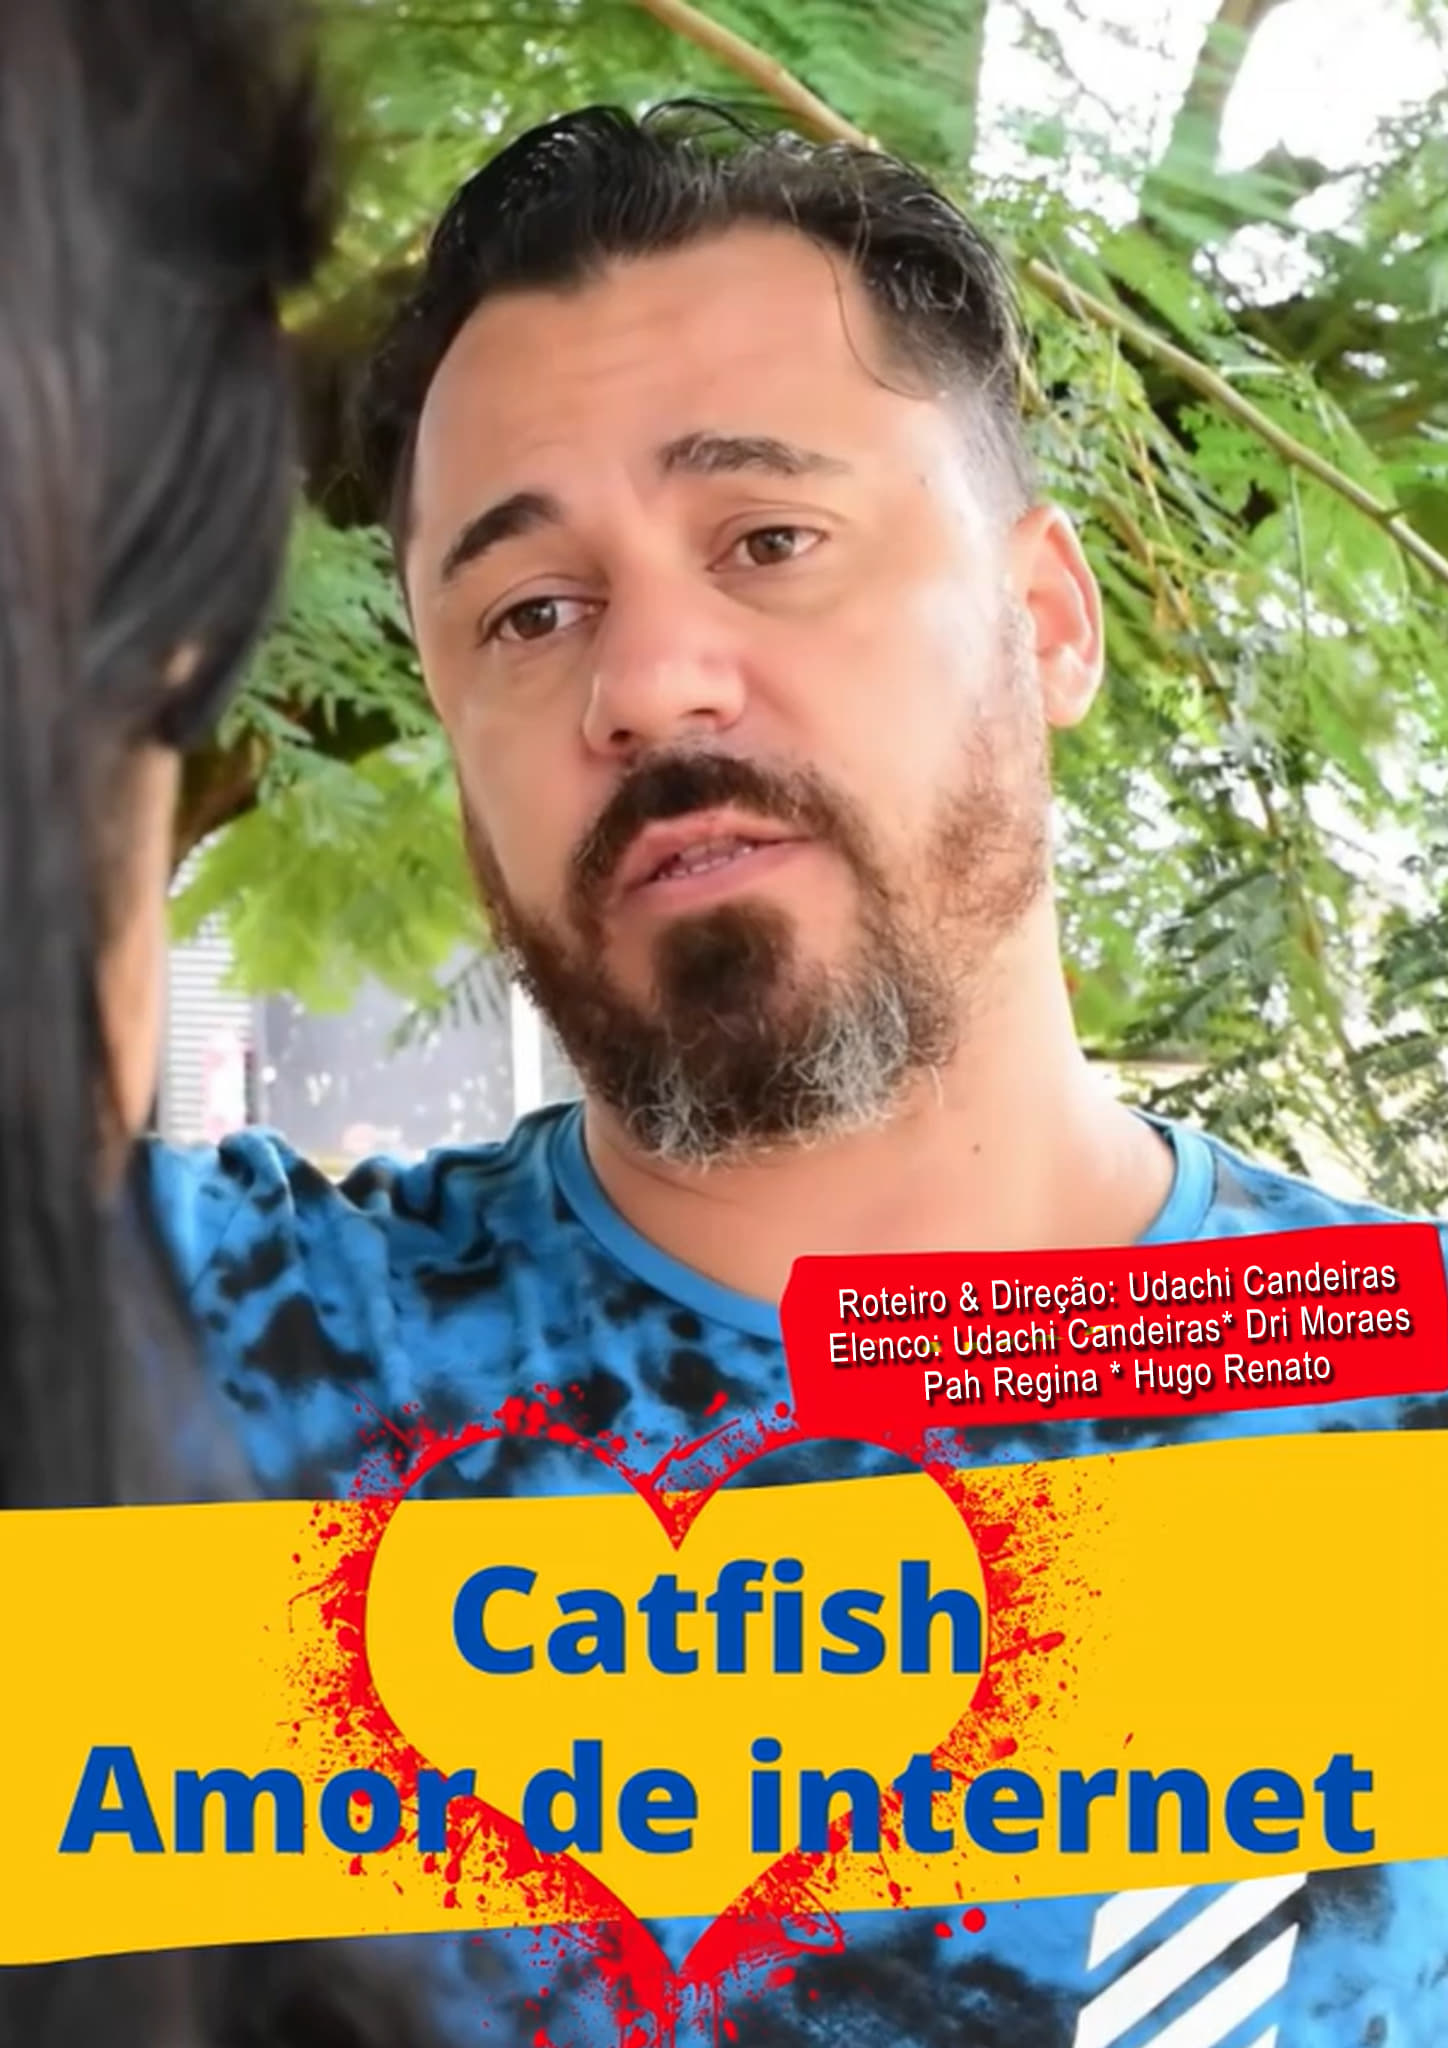 Catfish, amor de internet